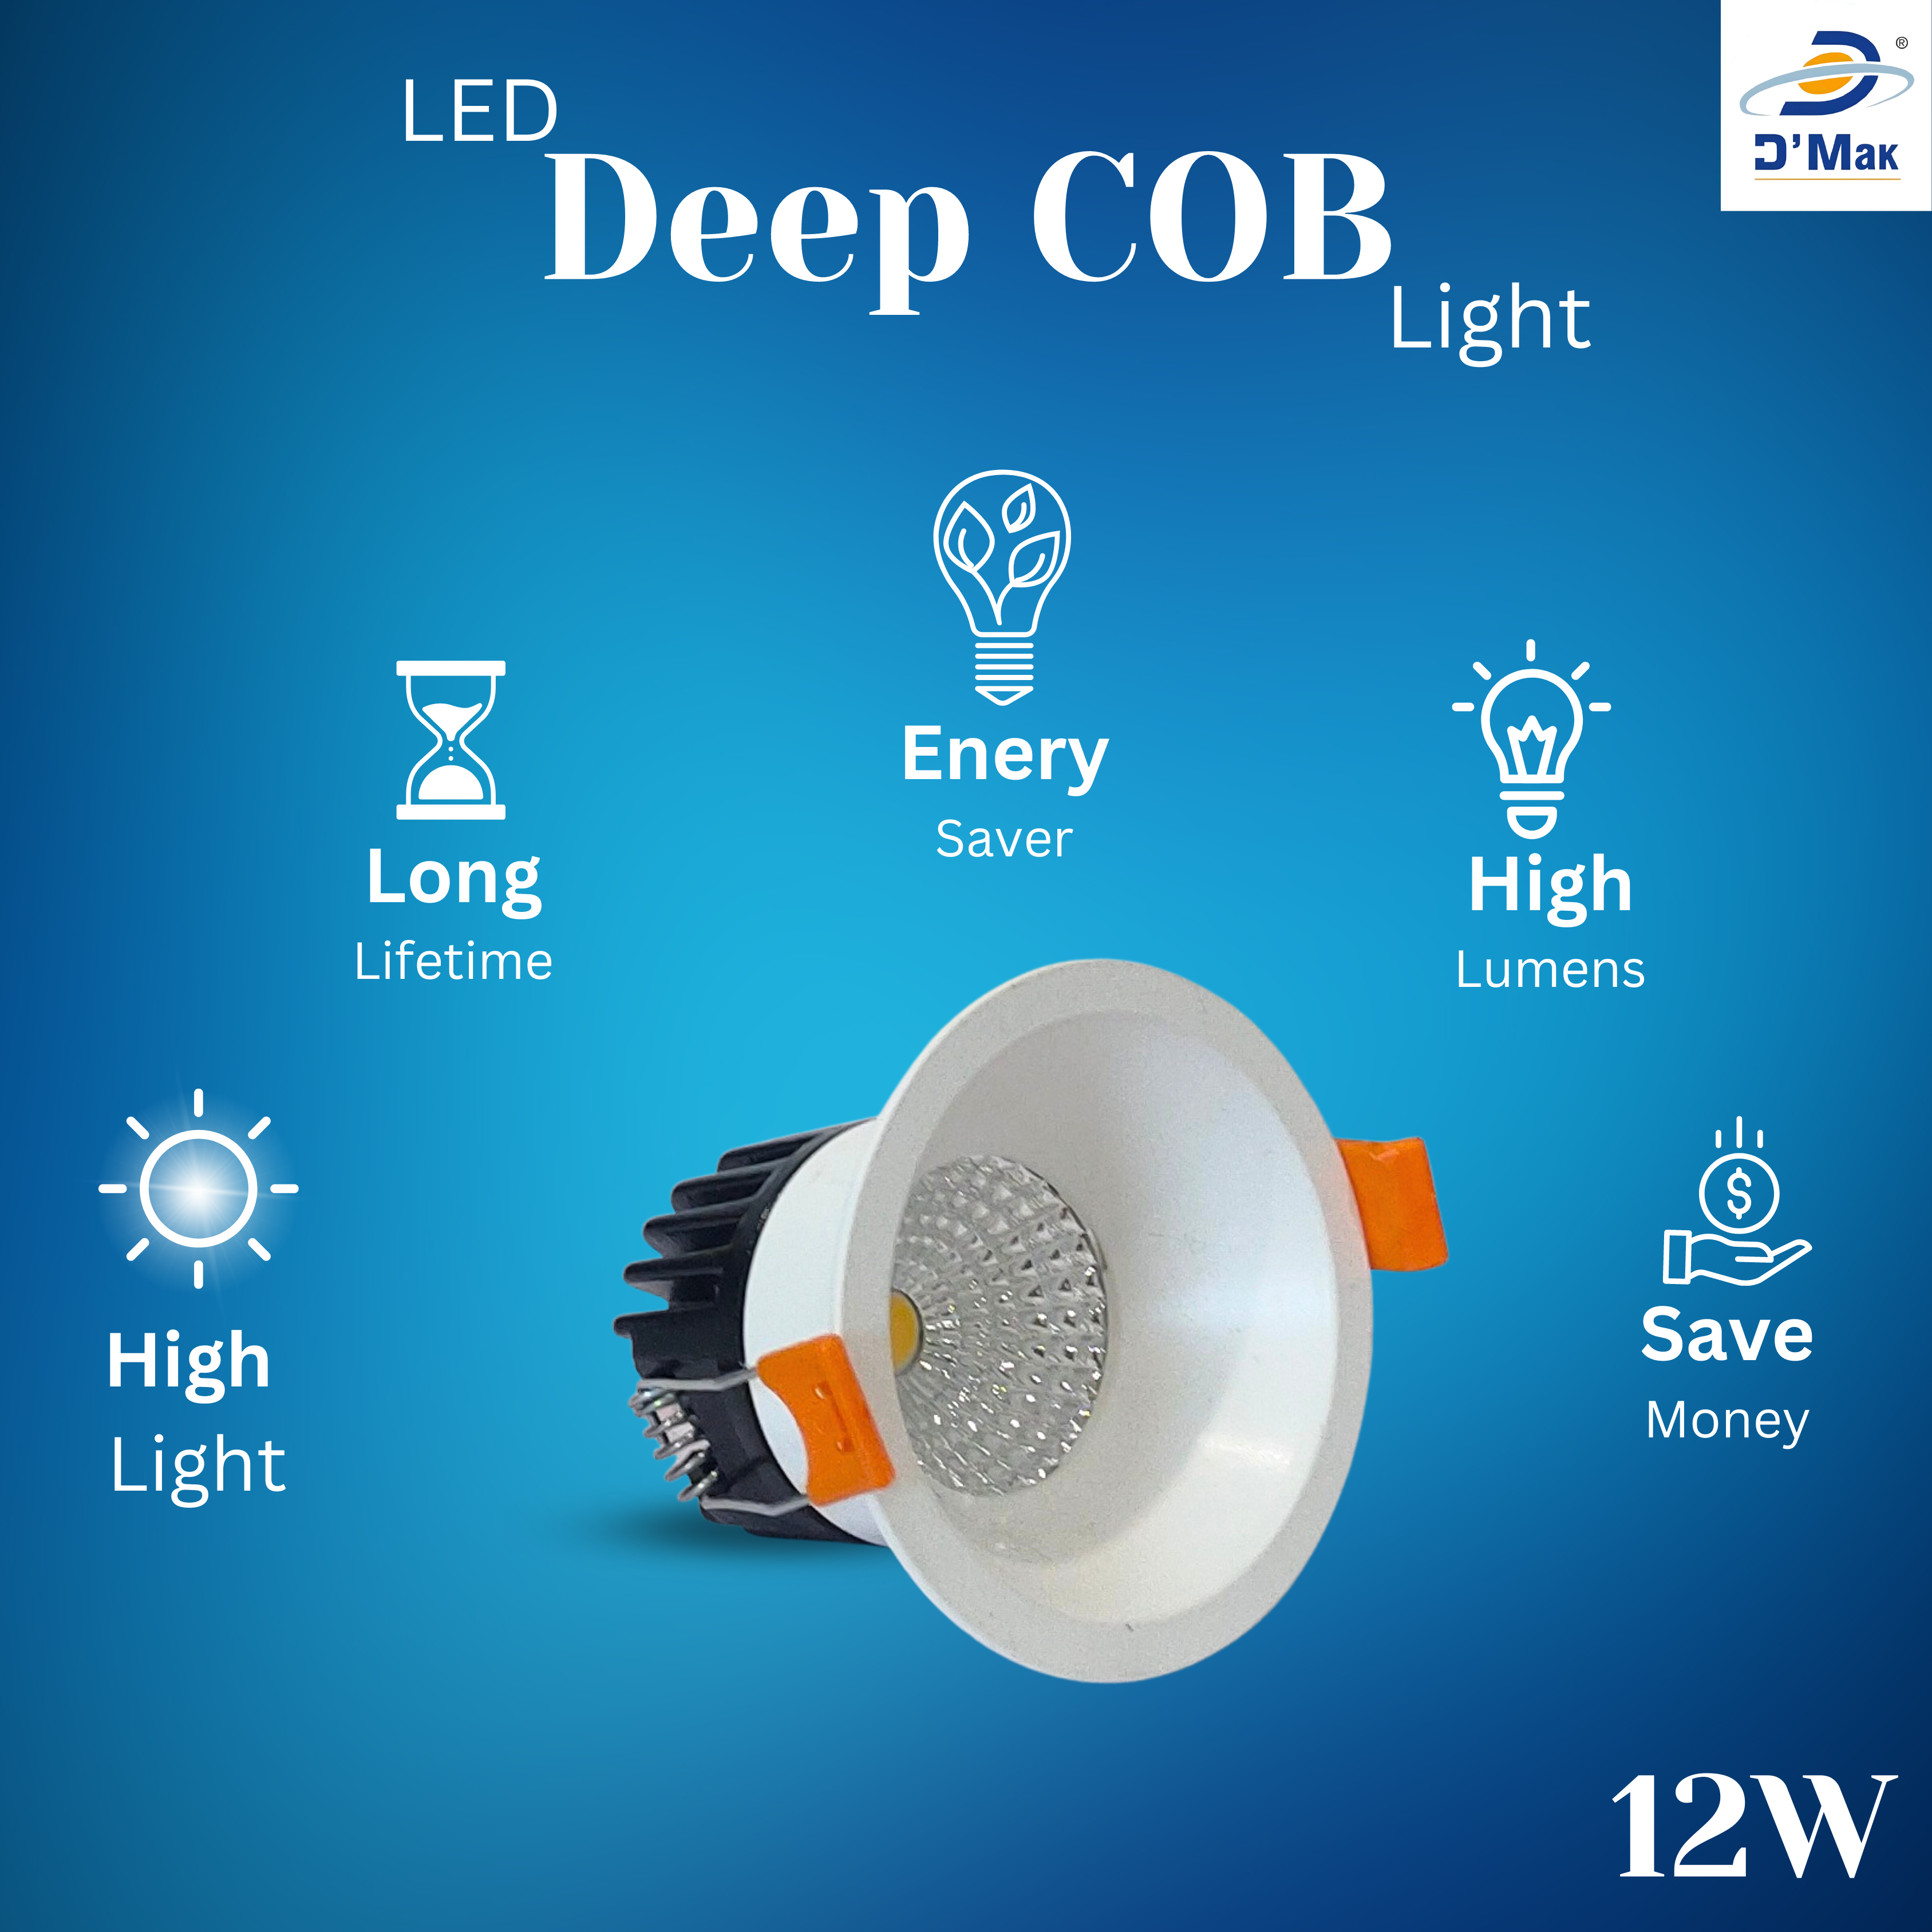 12 Watt Round LED White Body Deep COB Light for POP/ Recessed Lighting